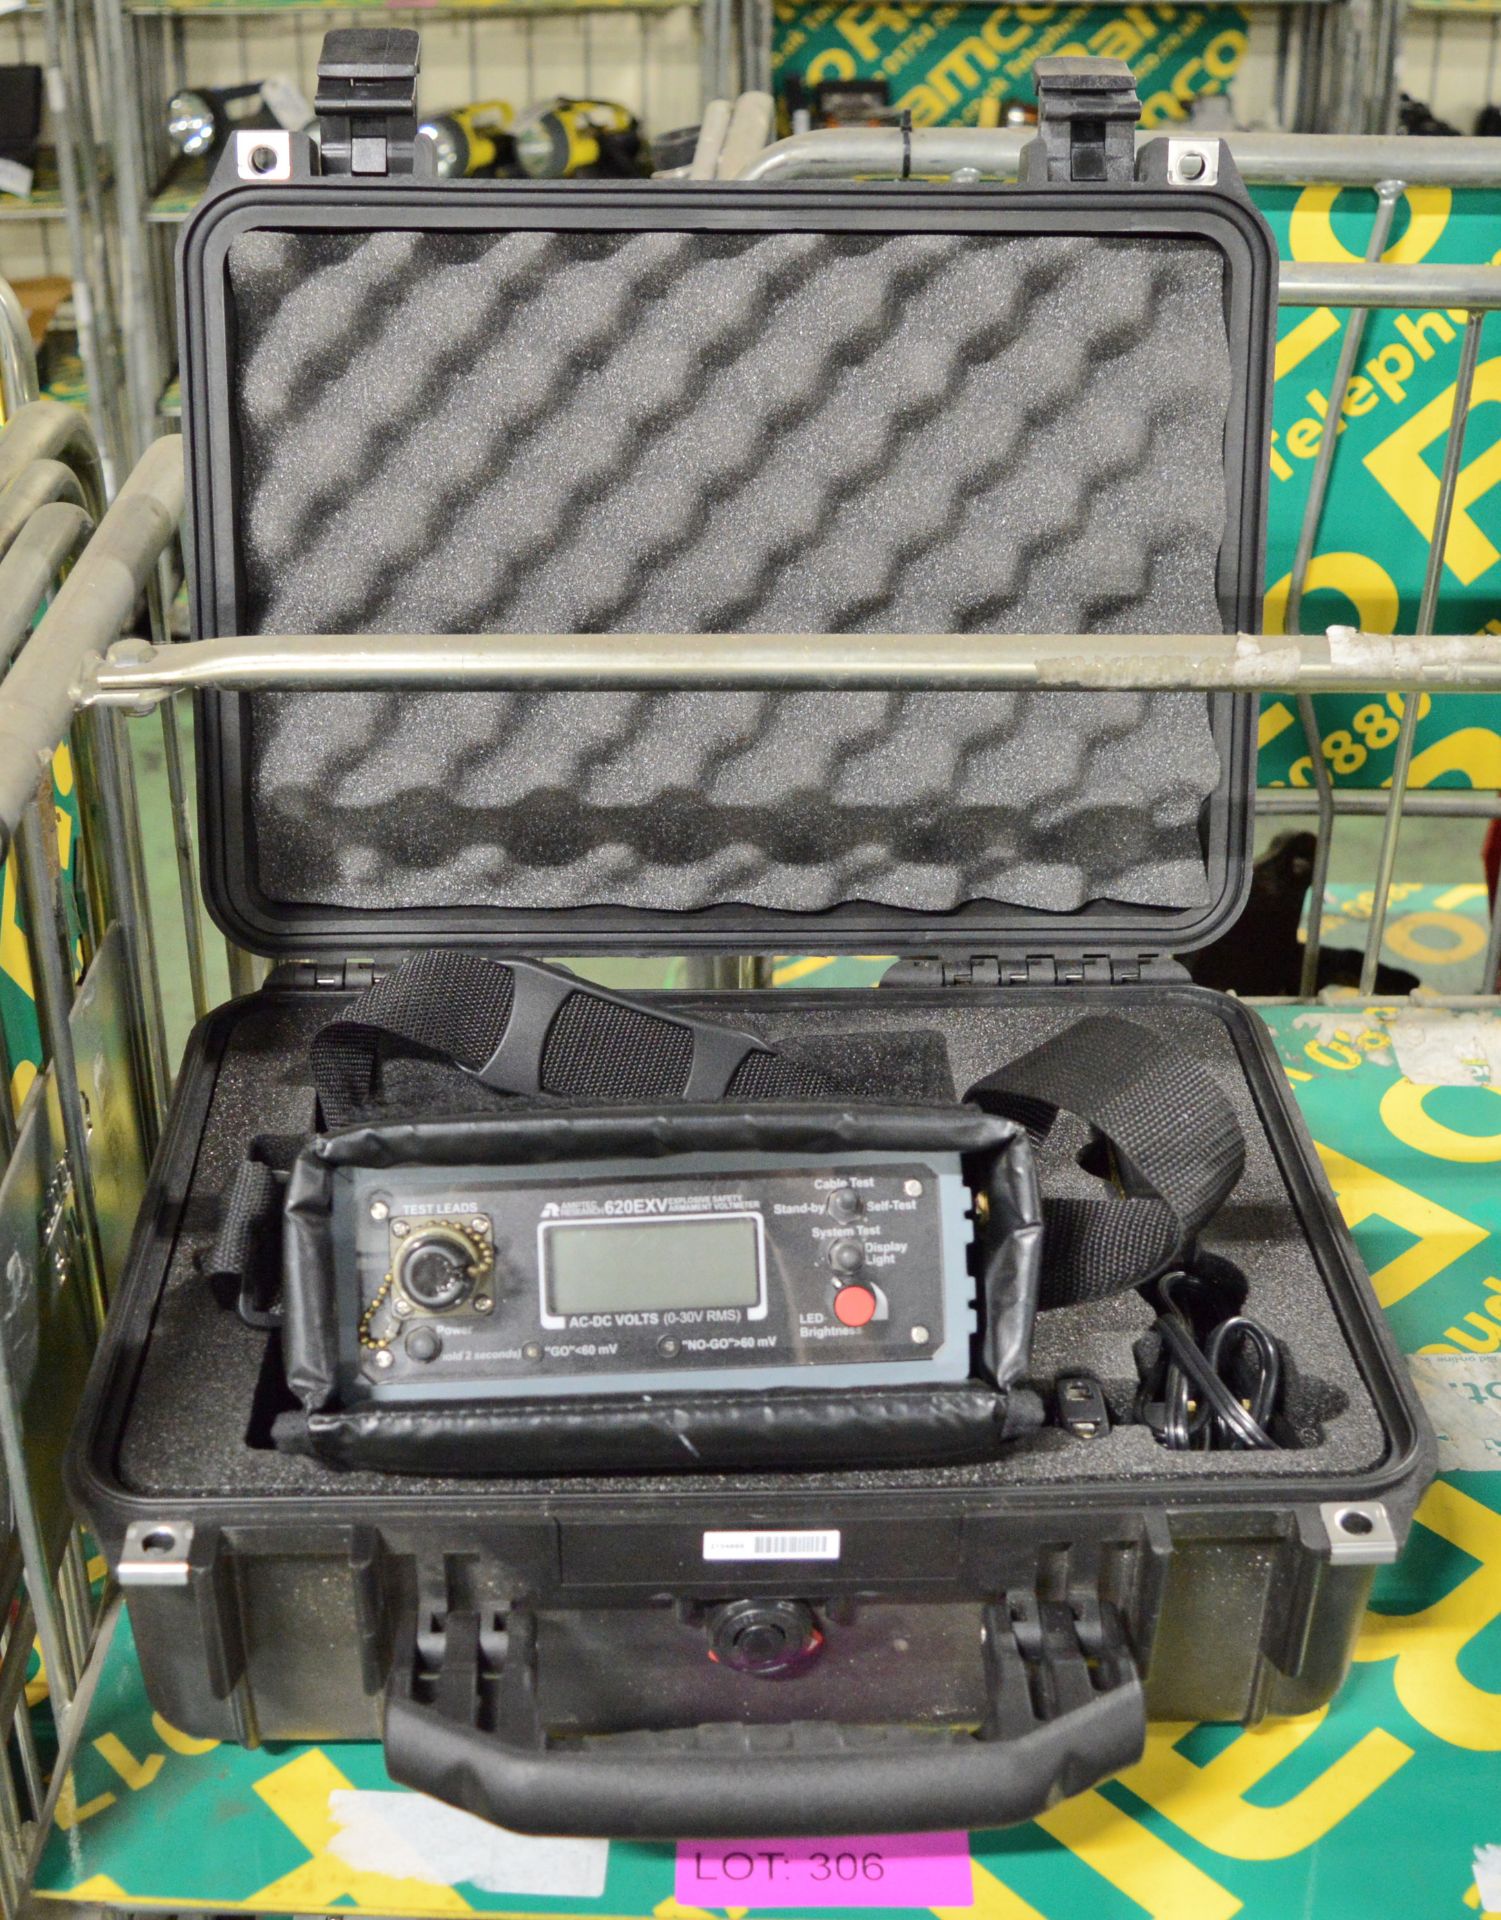 Amptec 620EXV Digital Voltmeter in Peli Case.